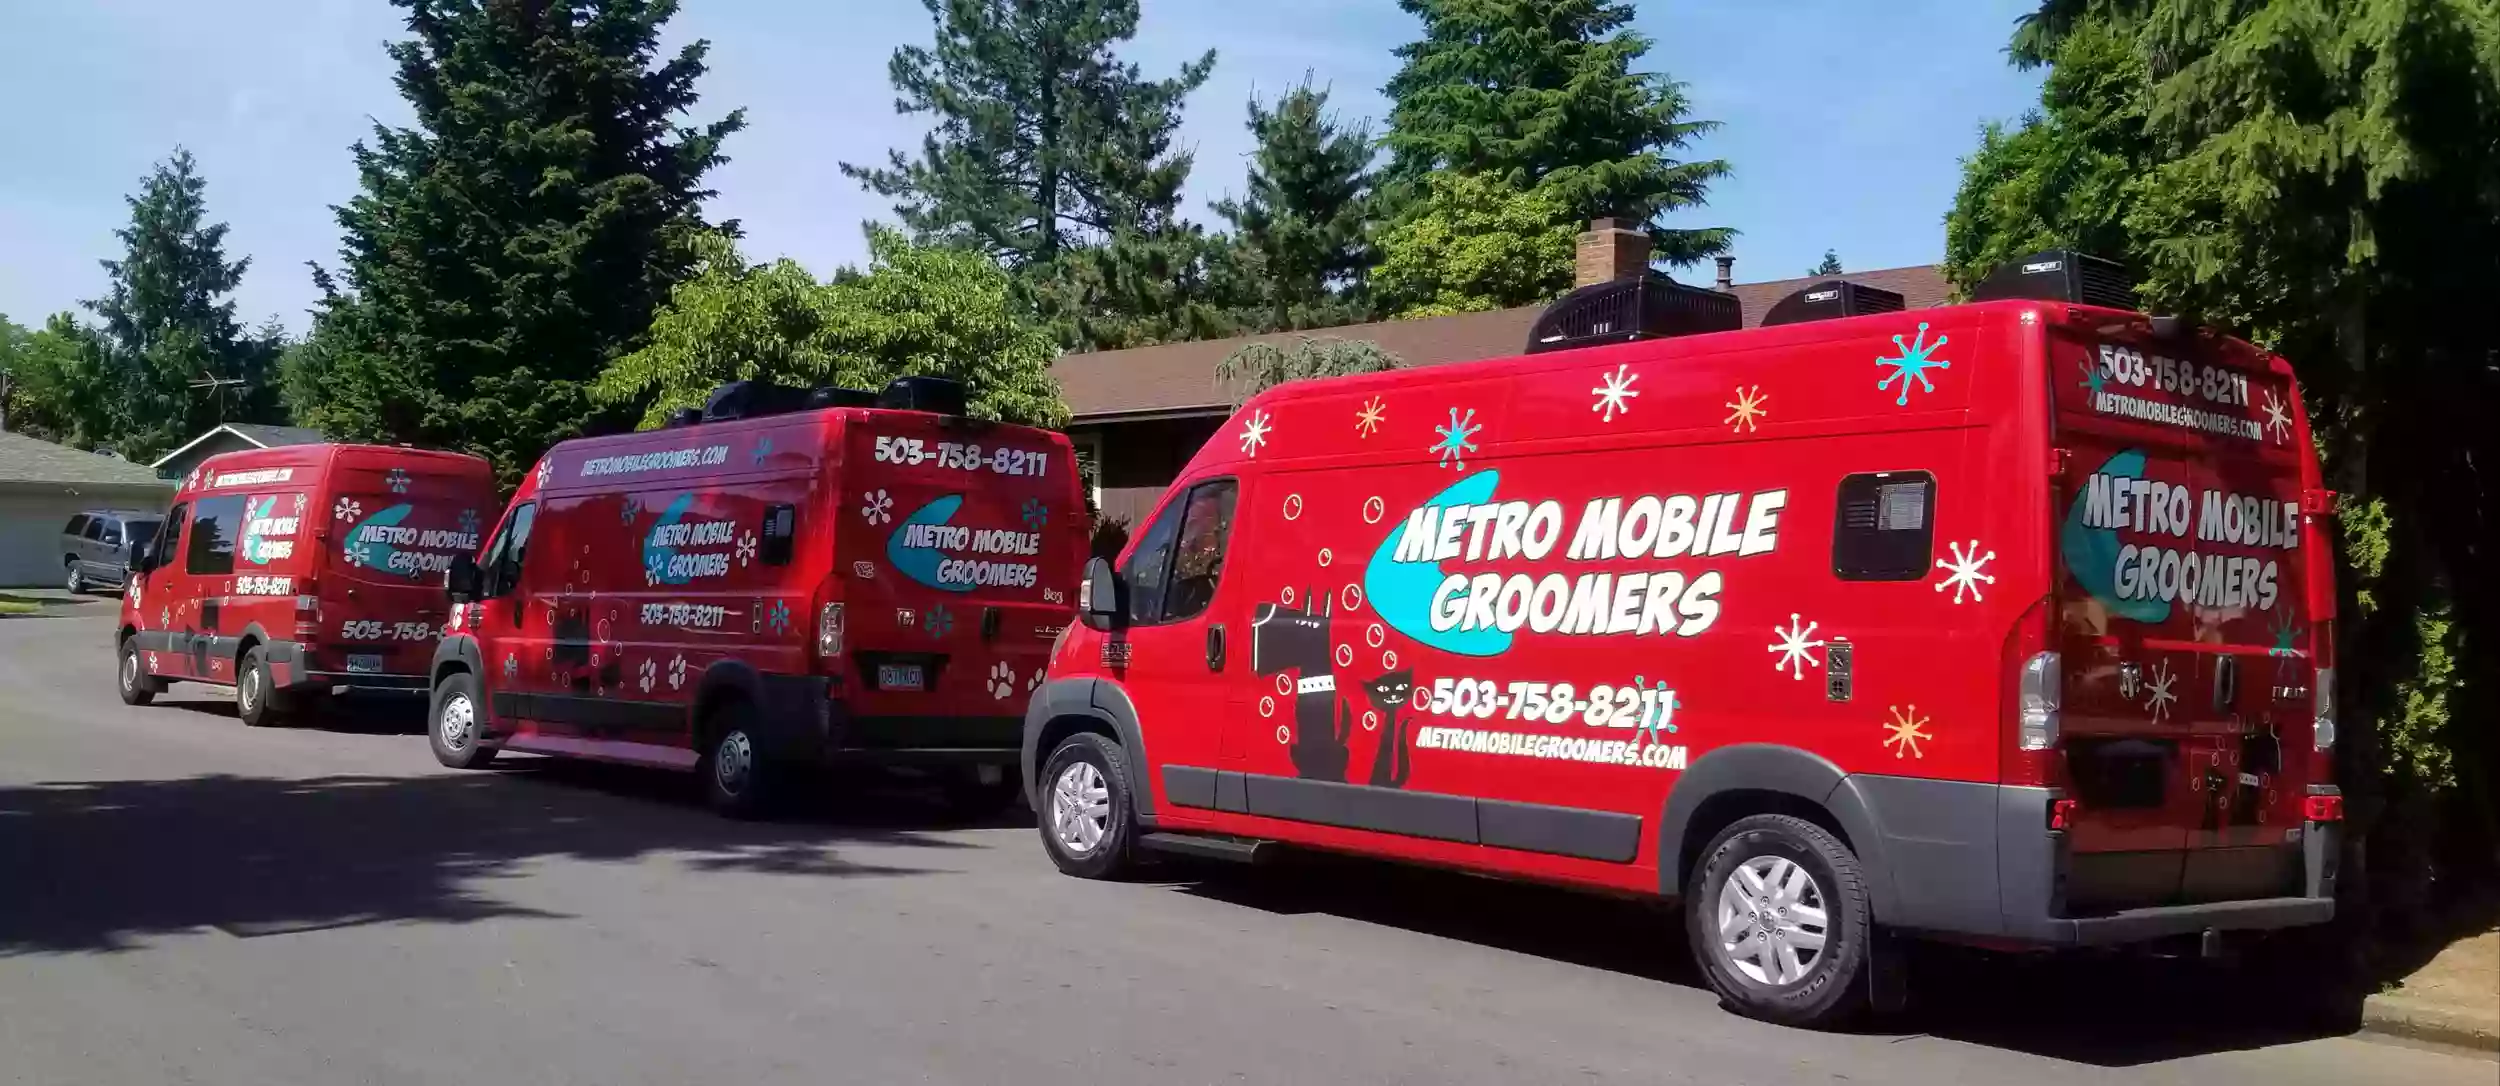 Metro Mobile Groomers